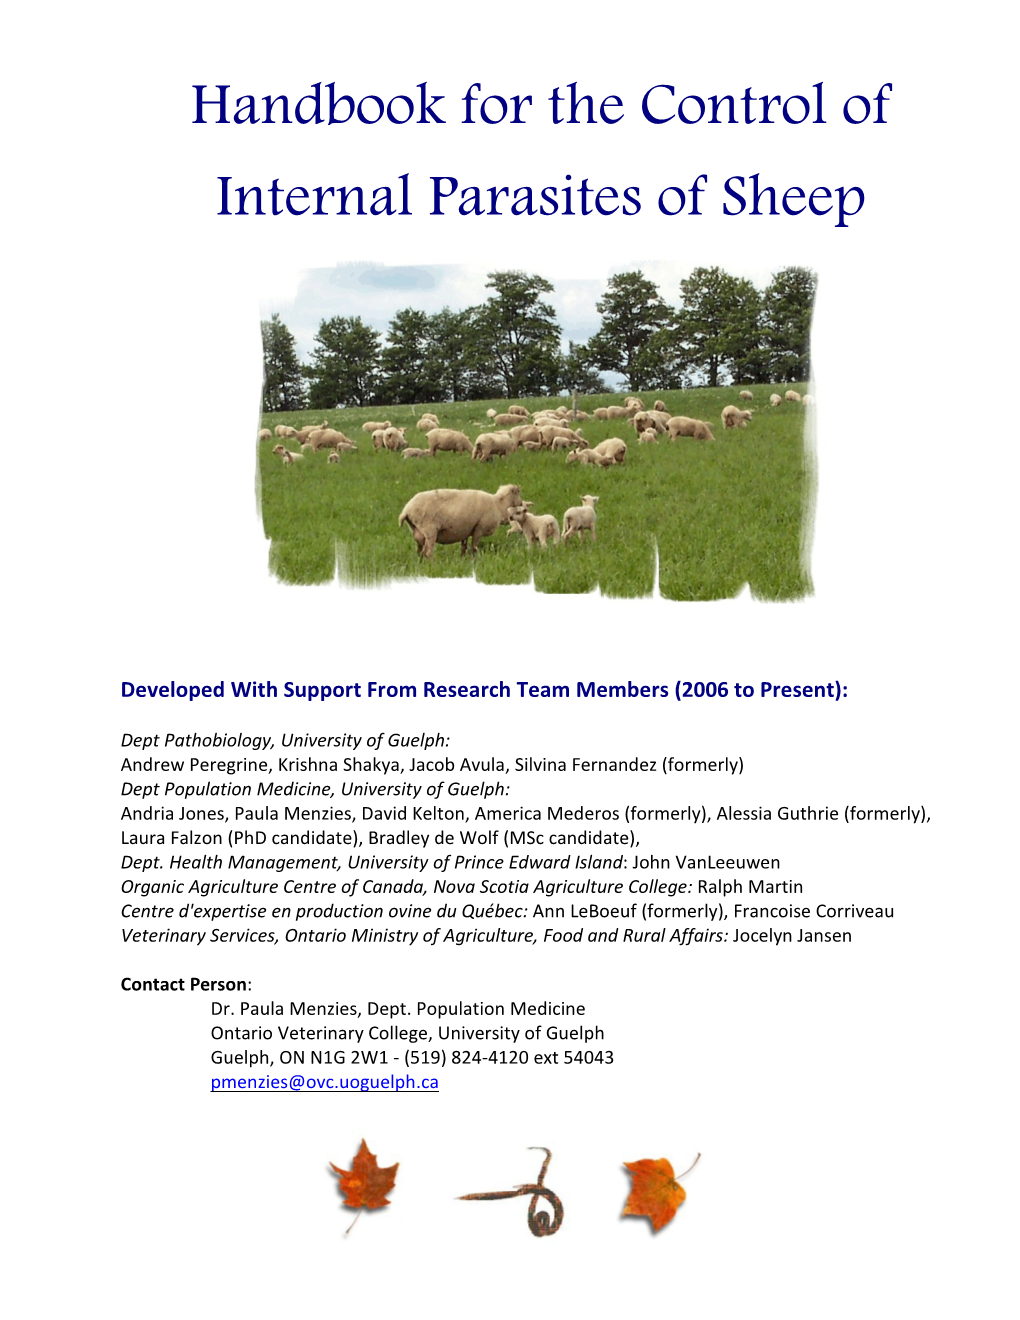 Handbook for the Control of Internal Parasites of Sheep